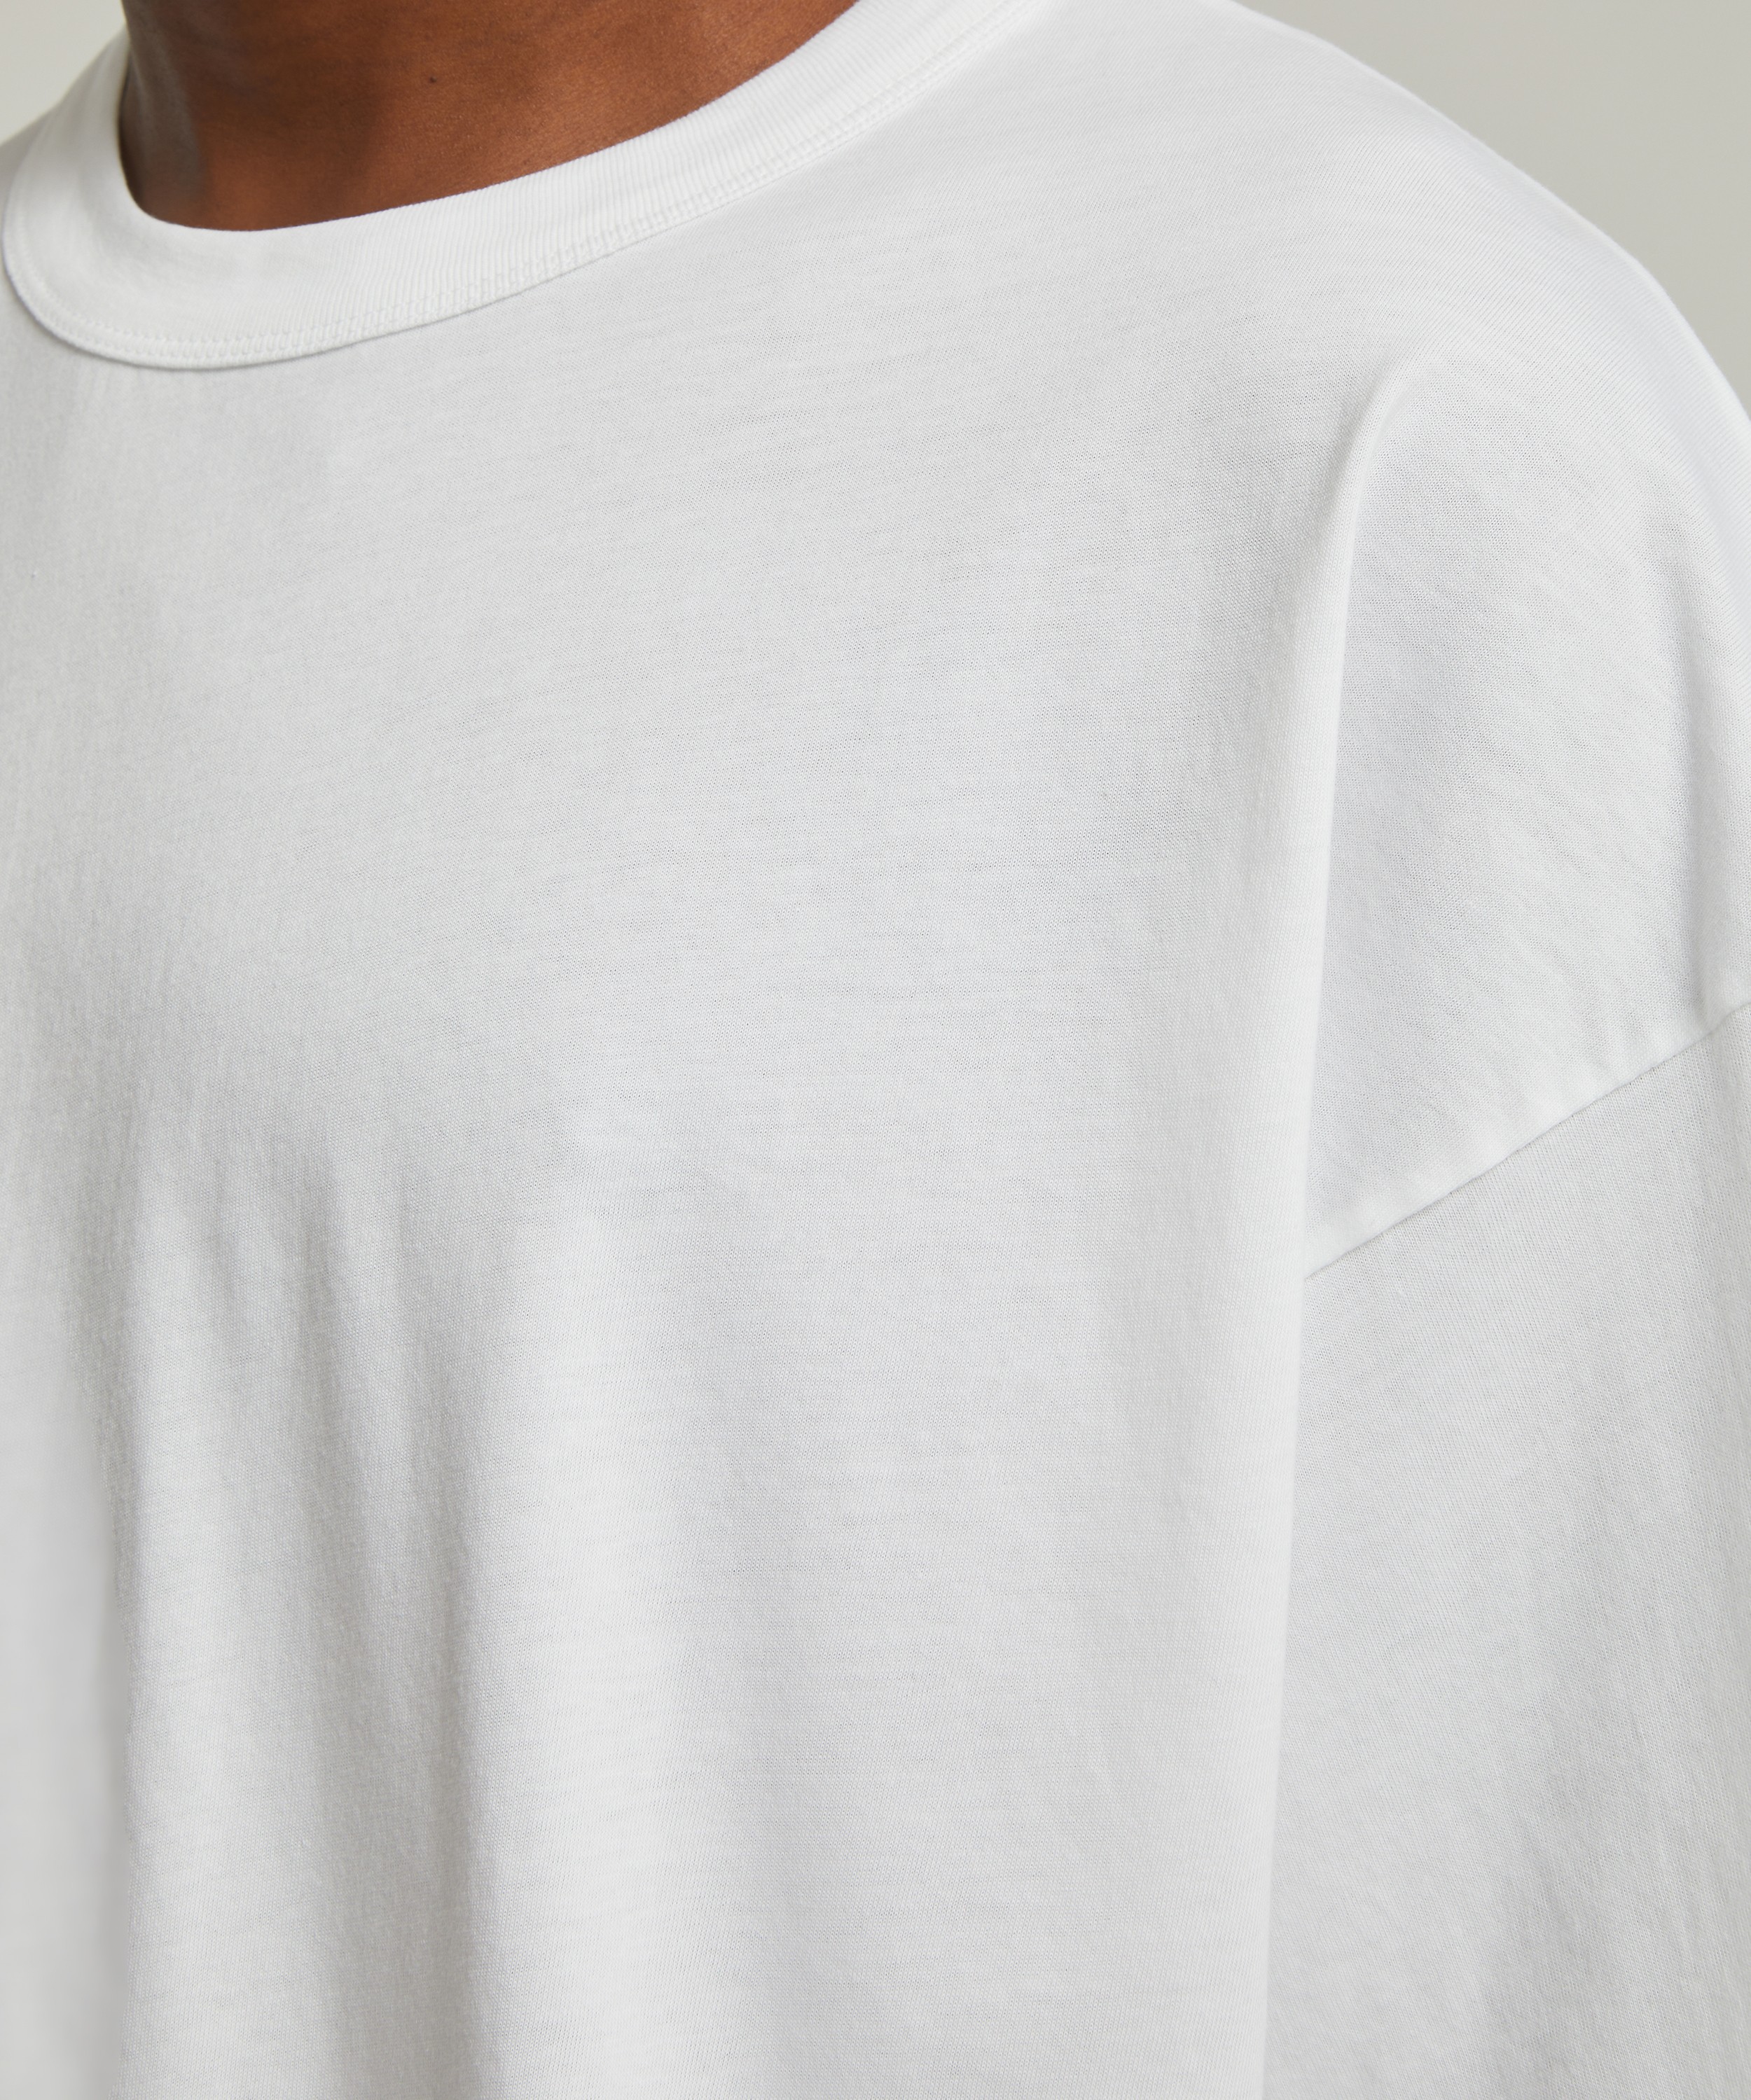 Dries Van Noten Oversized Cotton Jersey T-Shirt